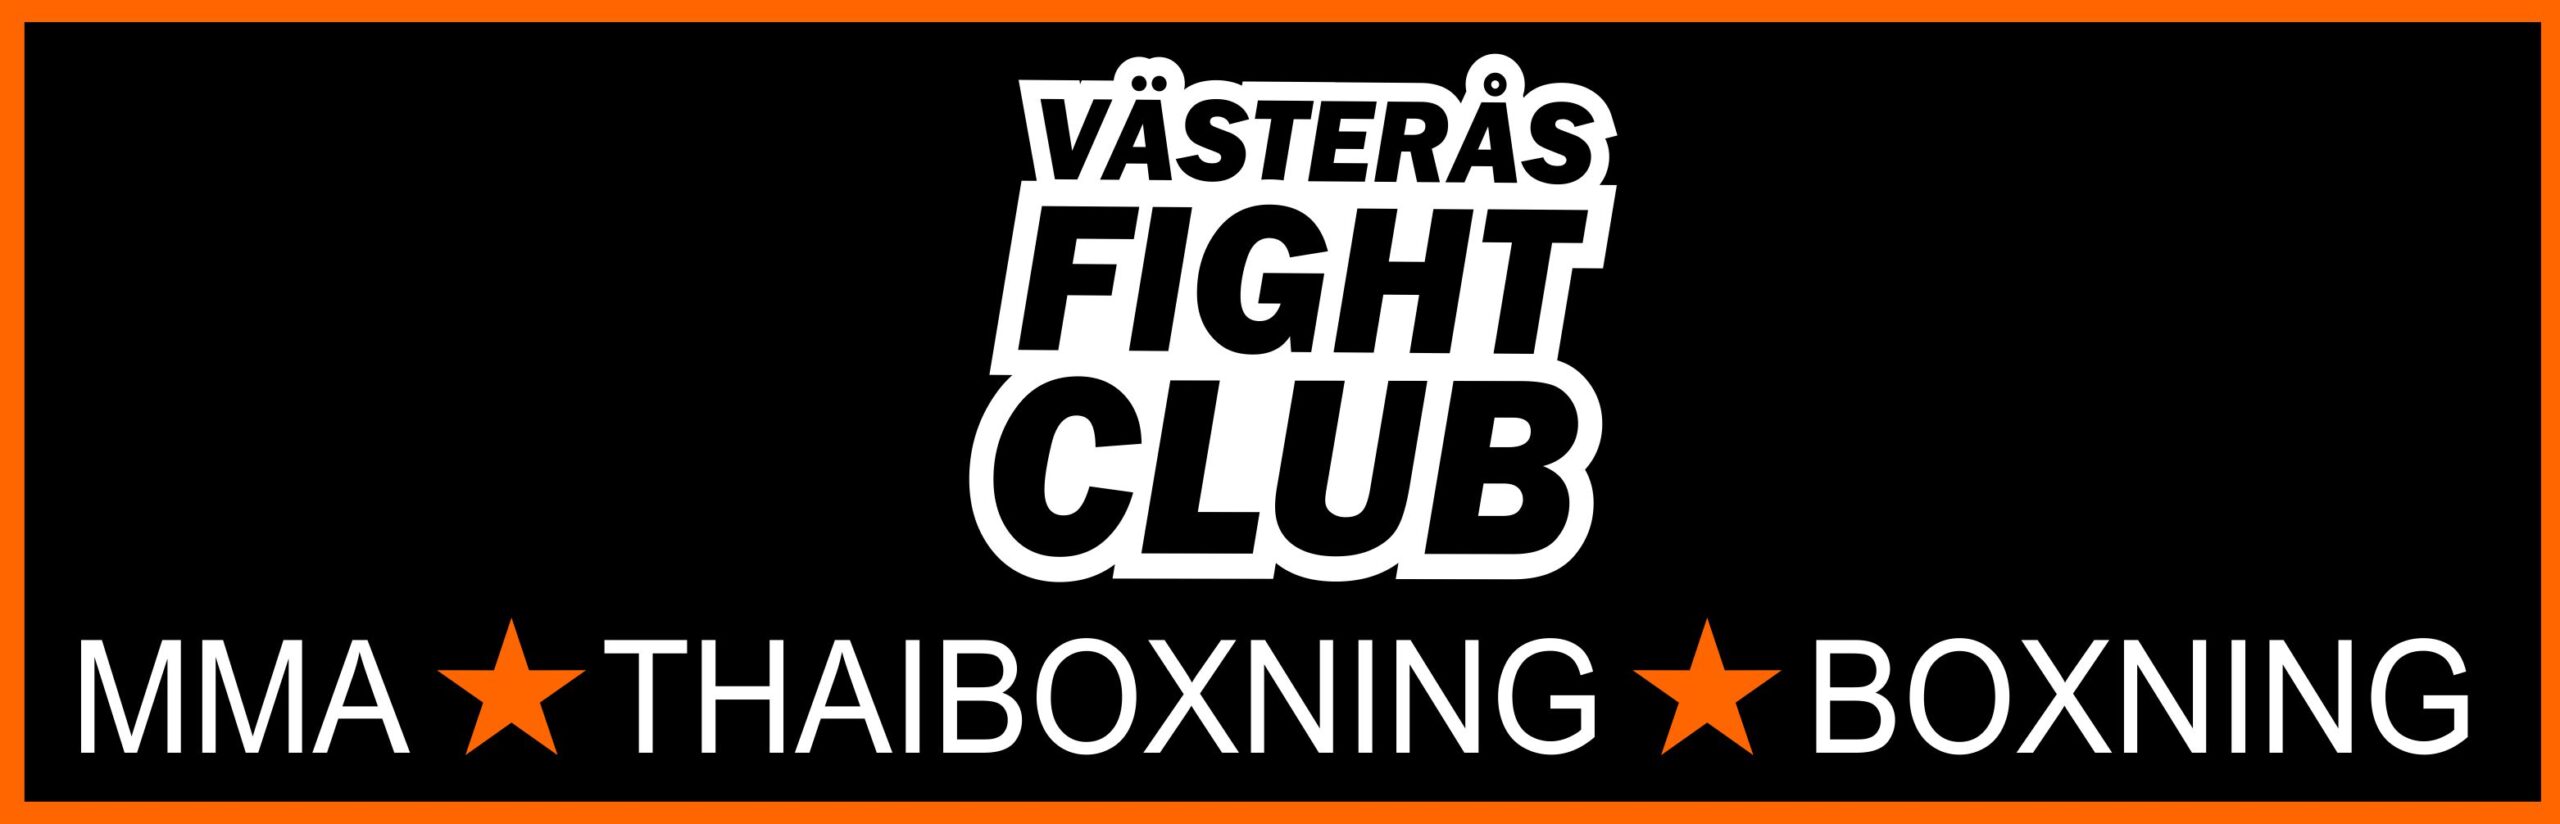 Västerås Fight Club